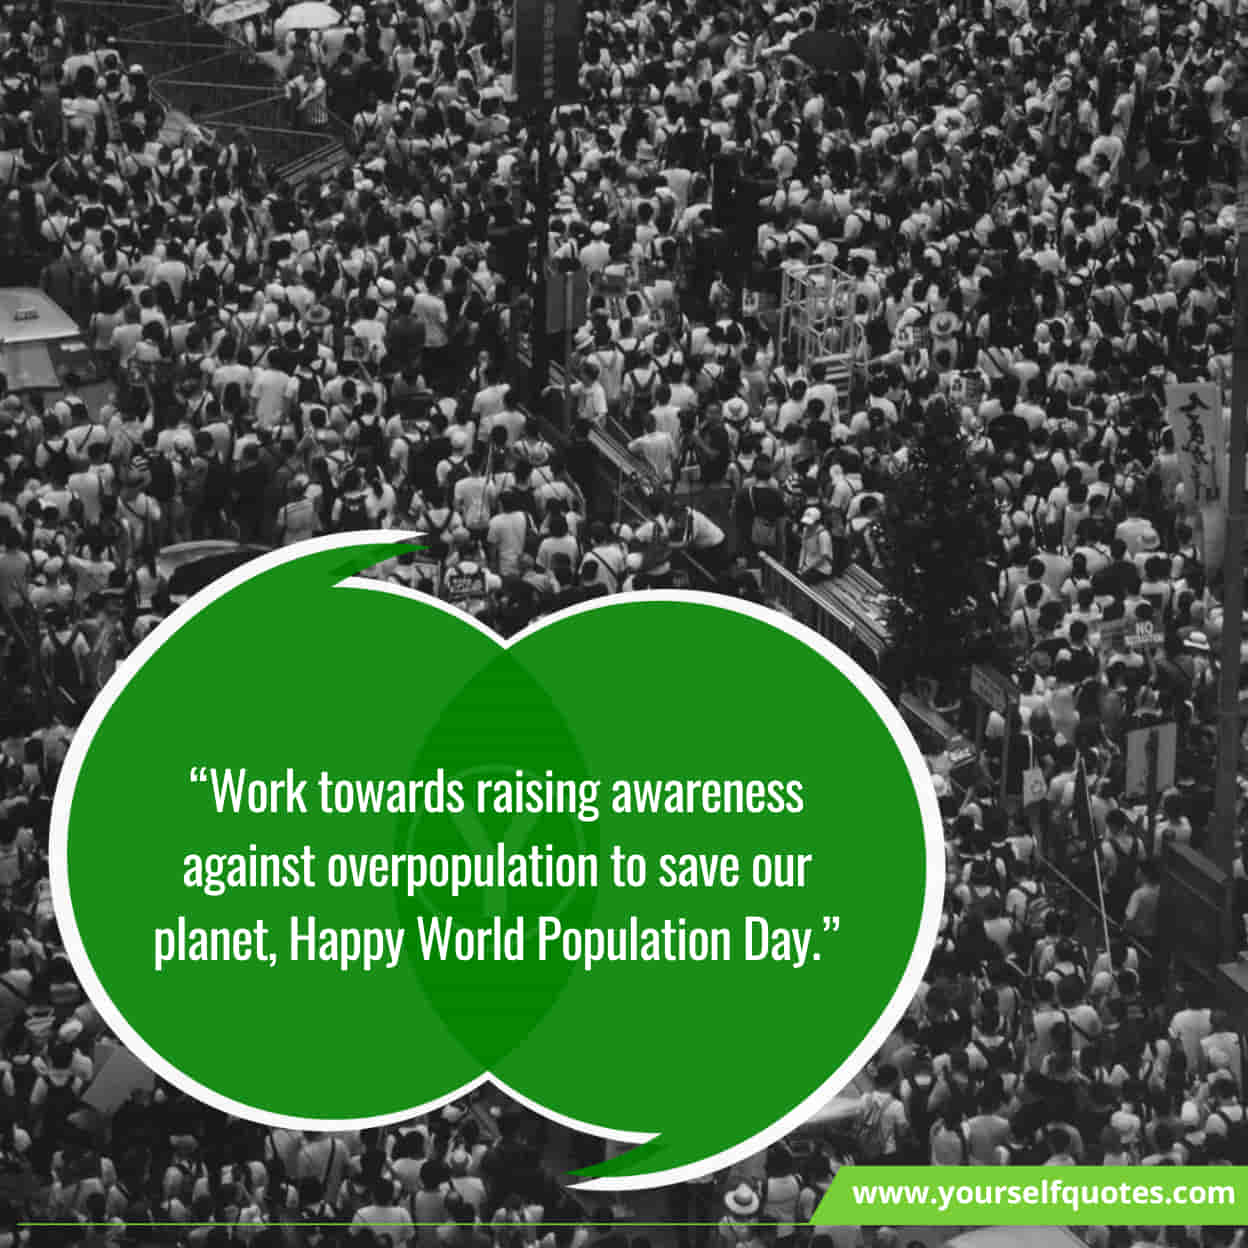 World Population Day Messages & Slogans